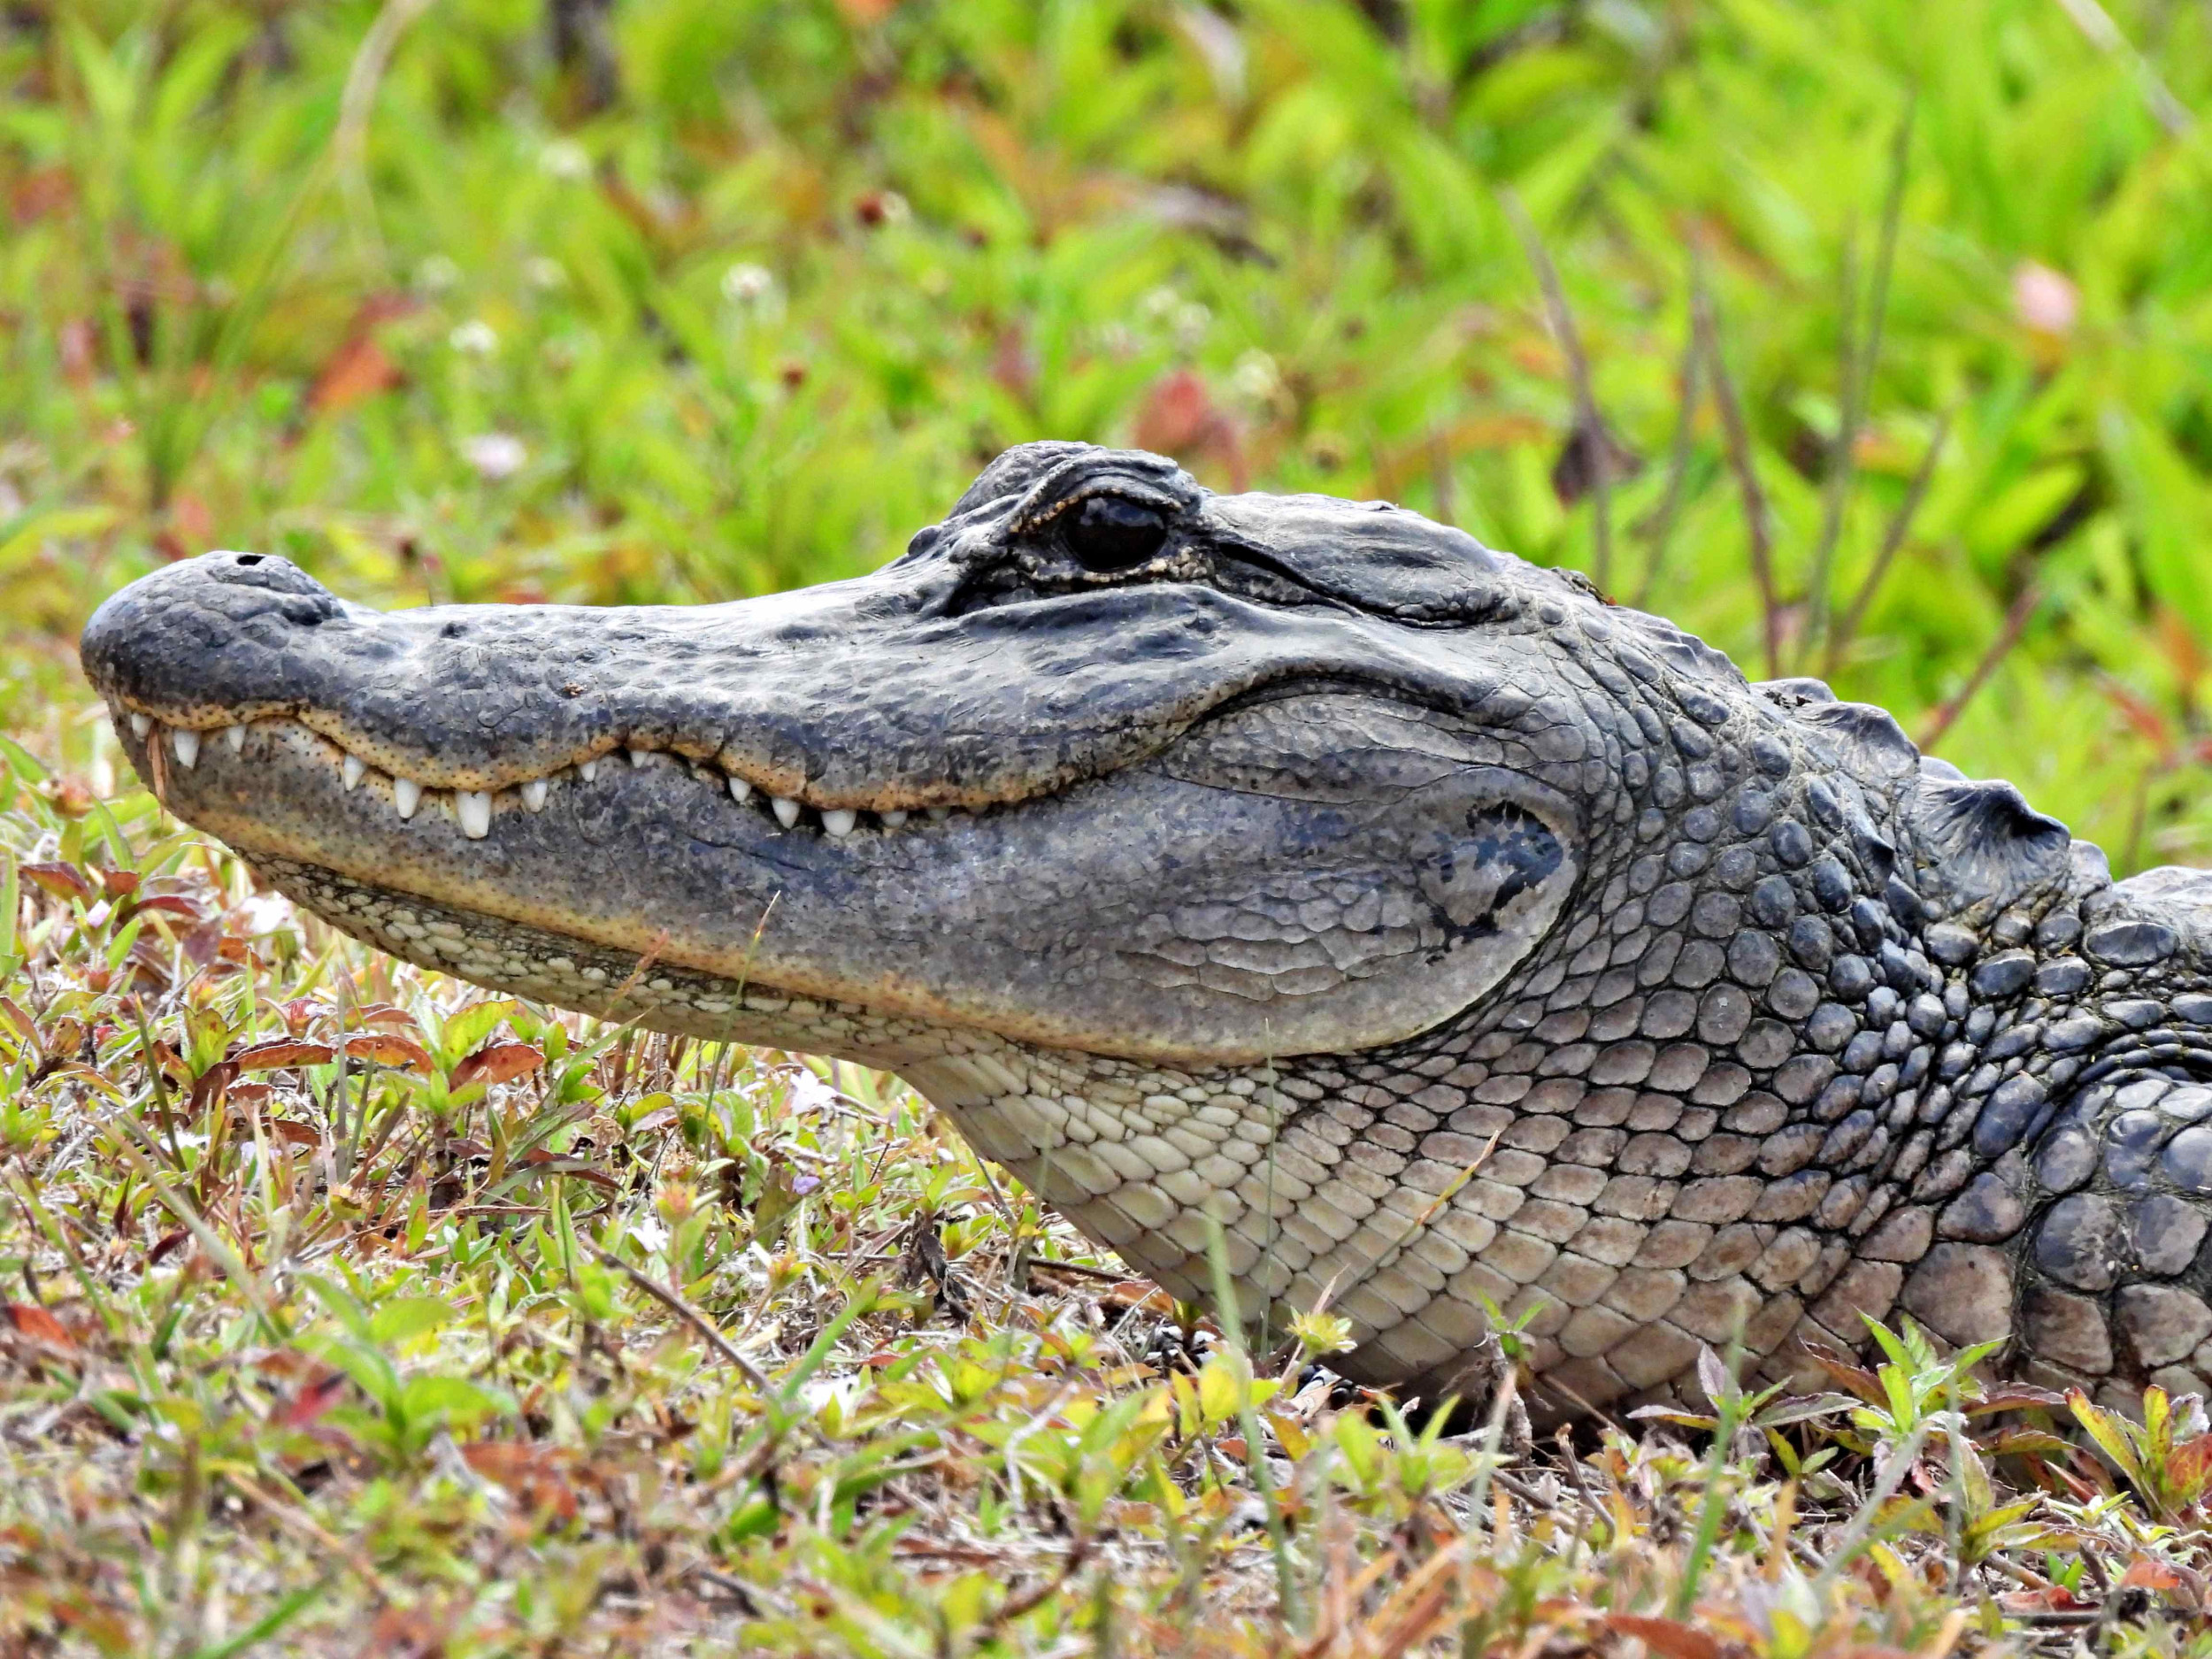 images of alligator